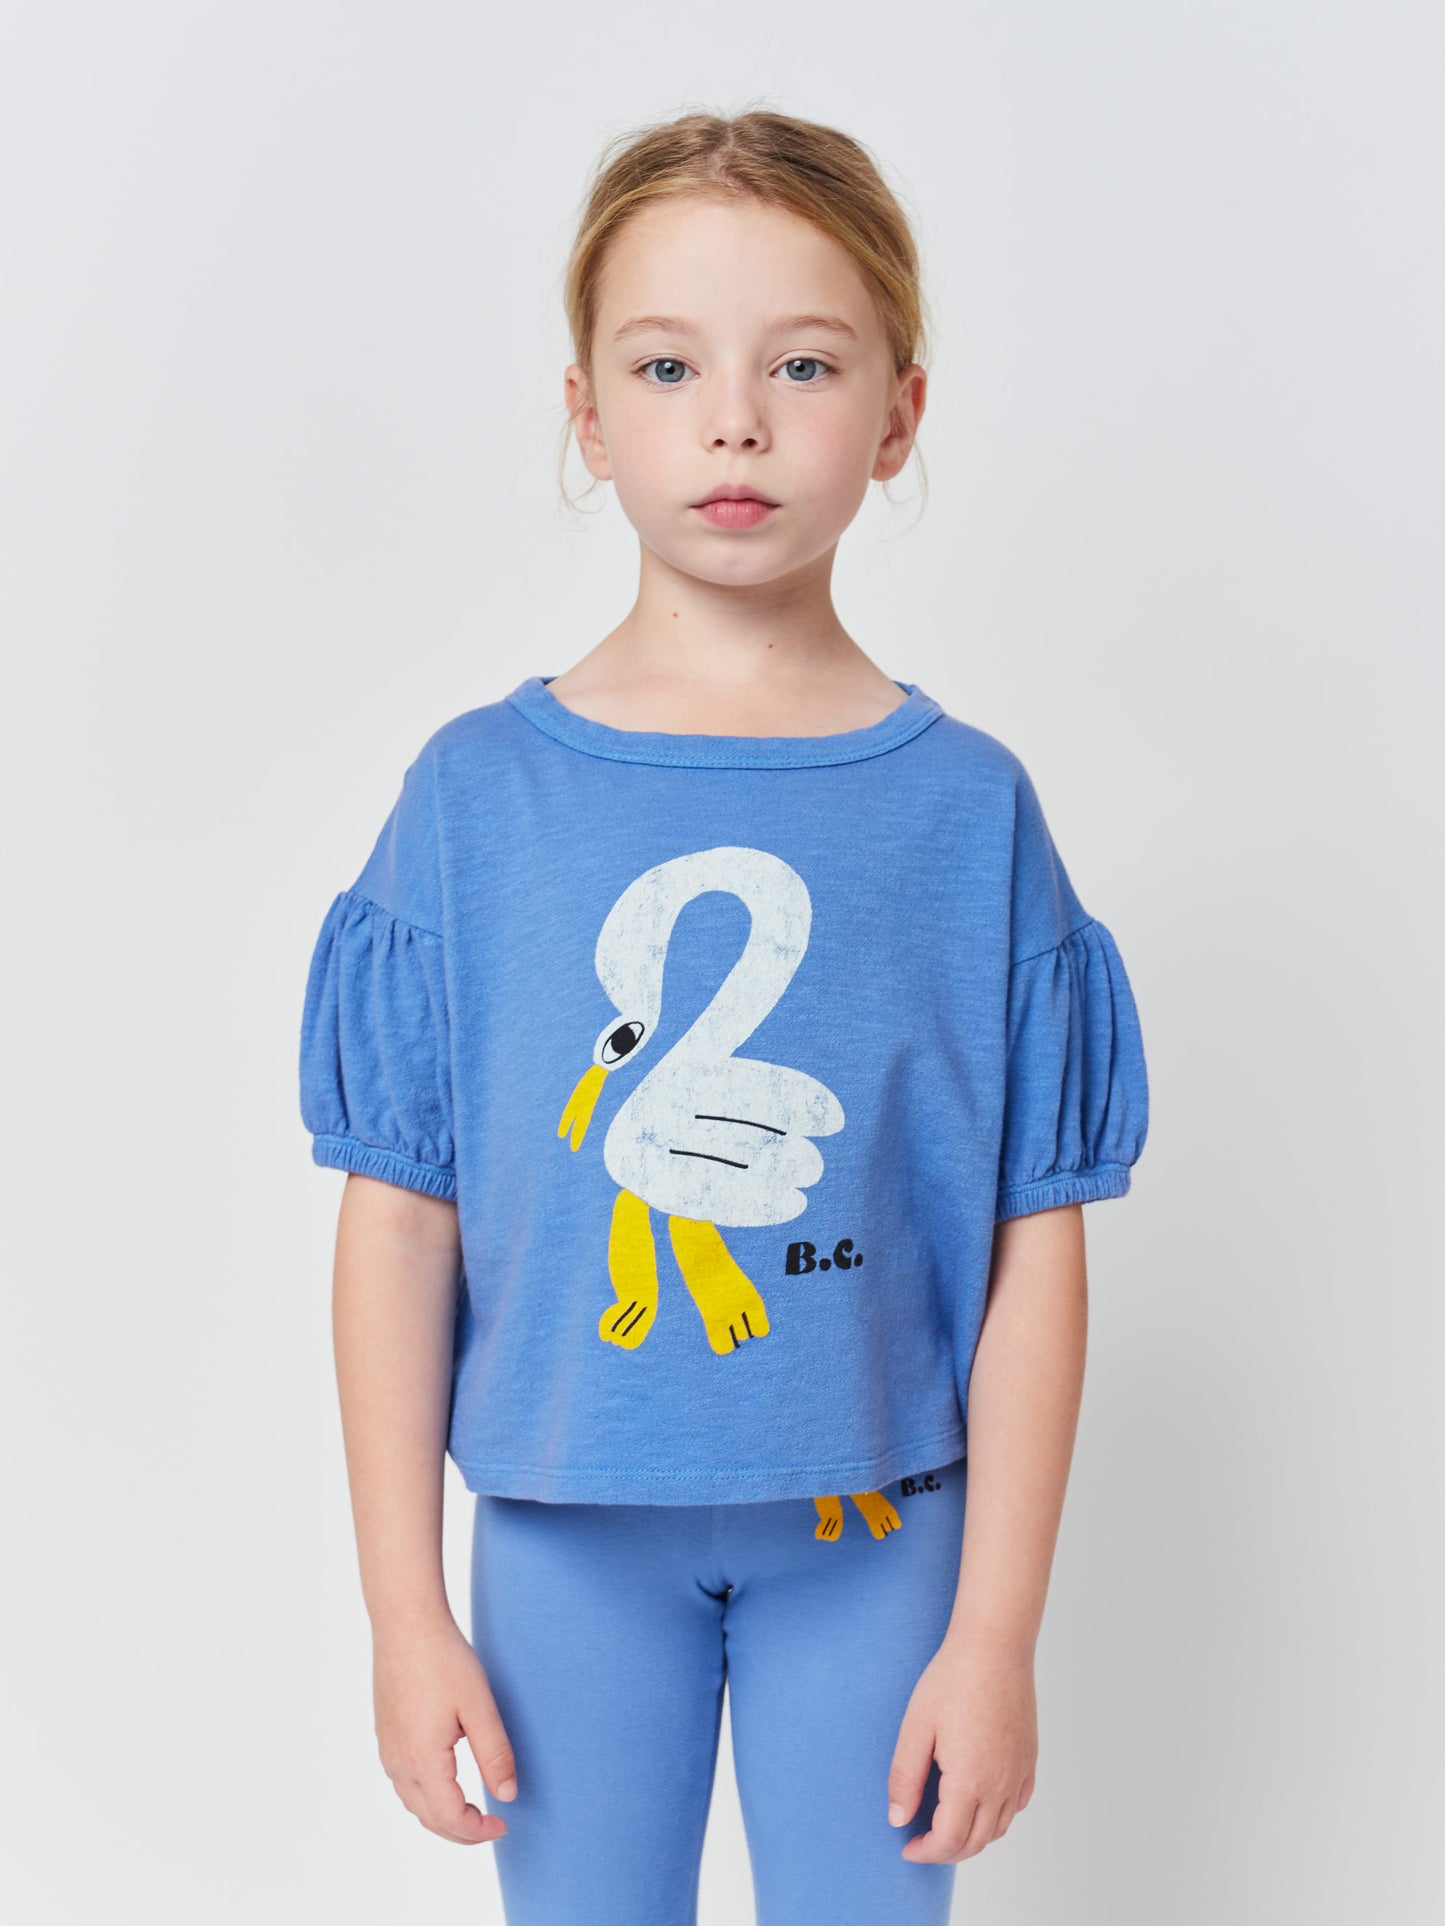 Pelican puffed sleeve T-shirt